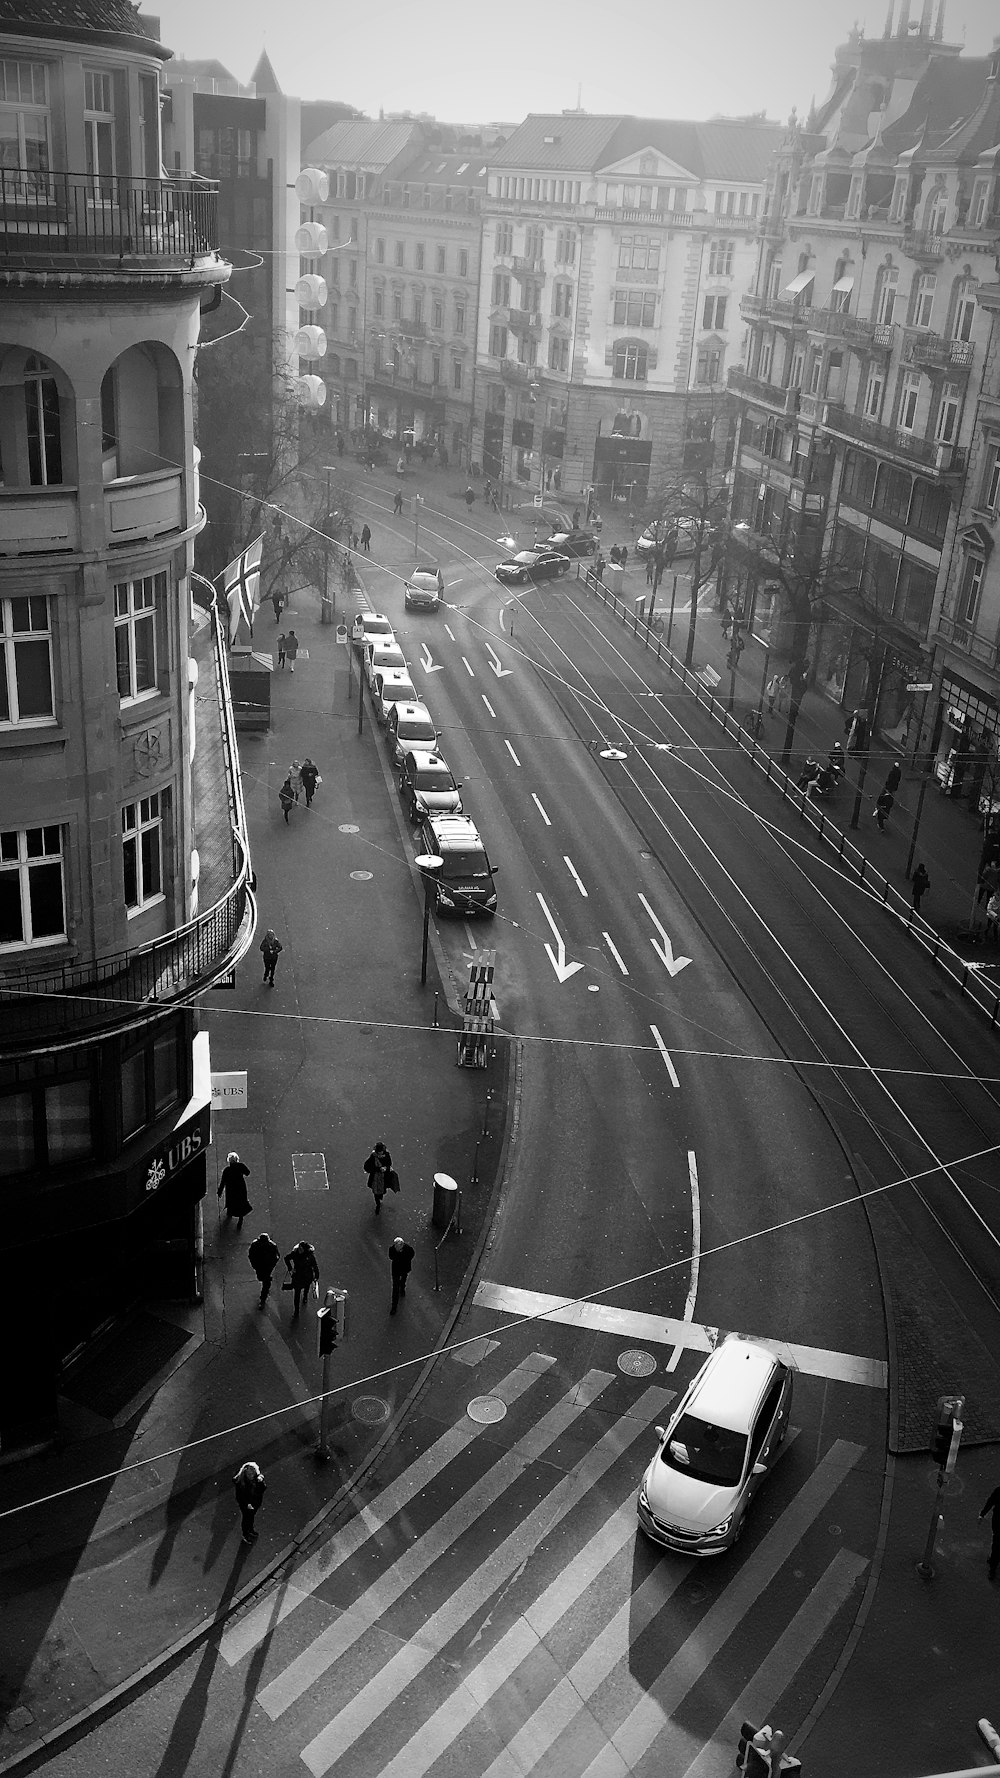 people walking on pedestrian lane in grayscale photography